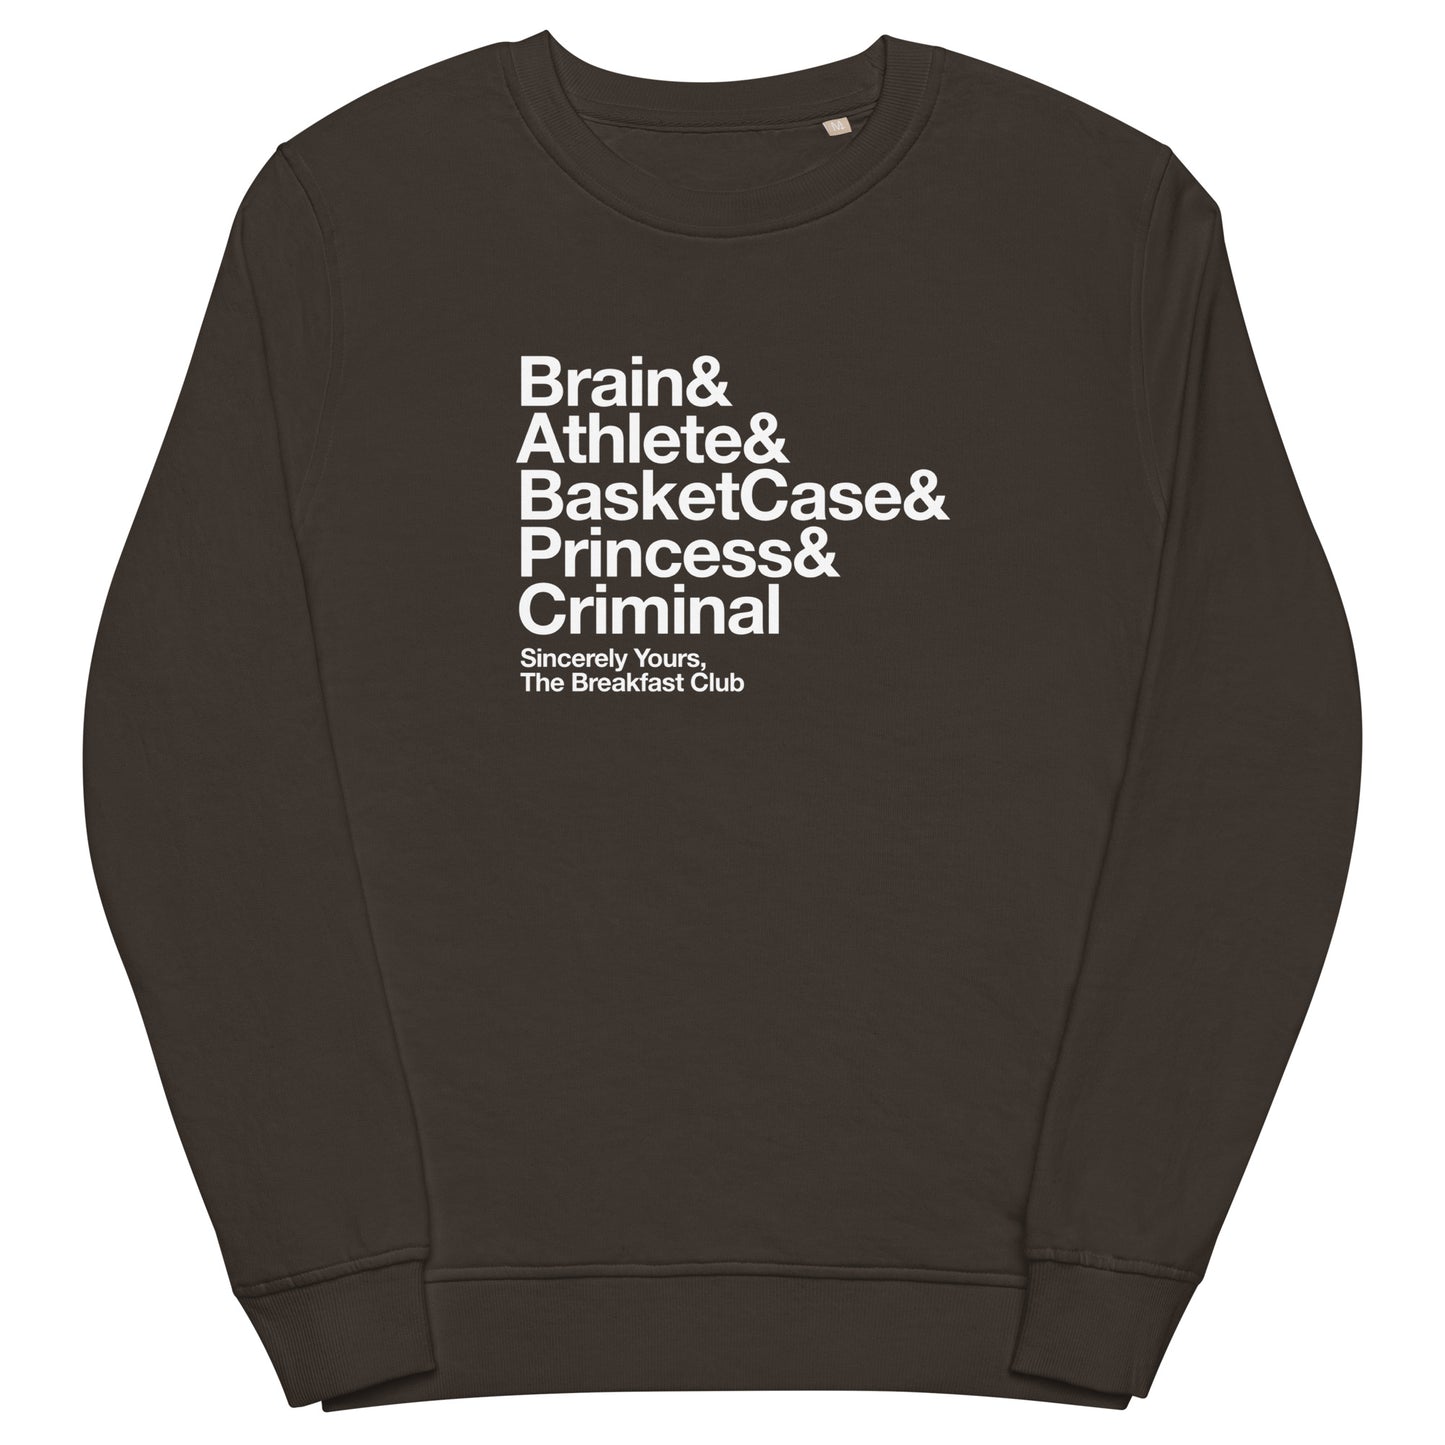 The Breakfast Club Unisex organic sweatshirt